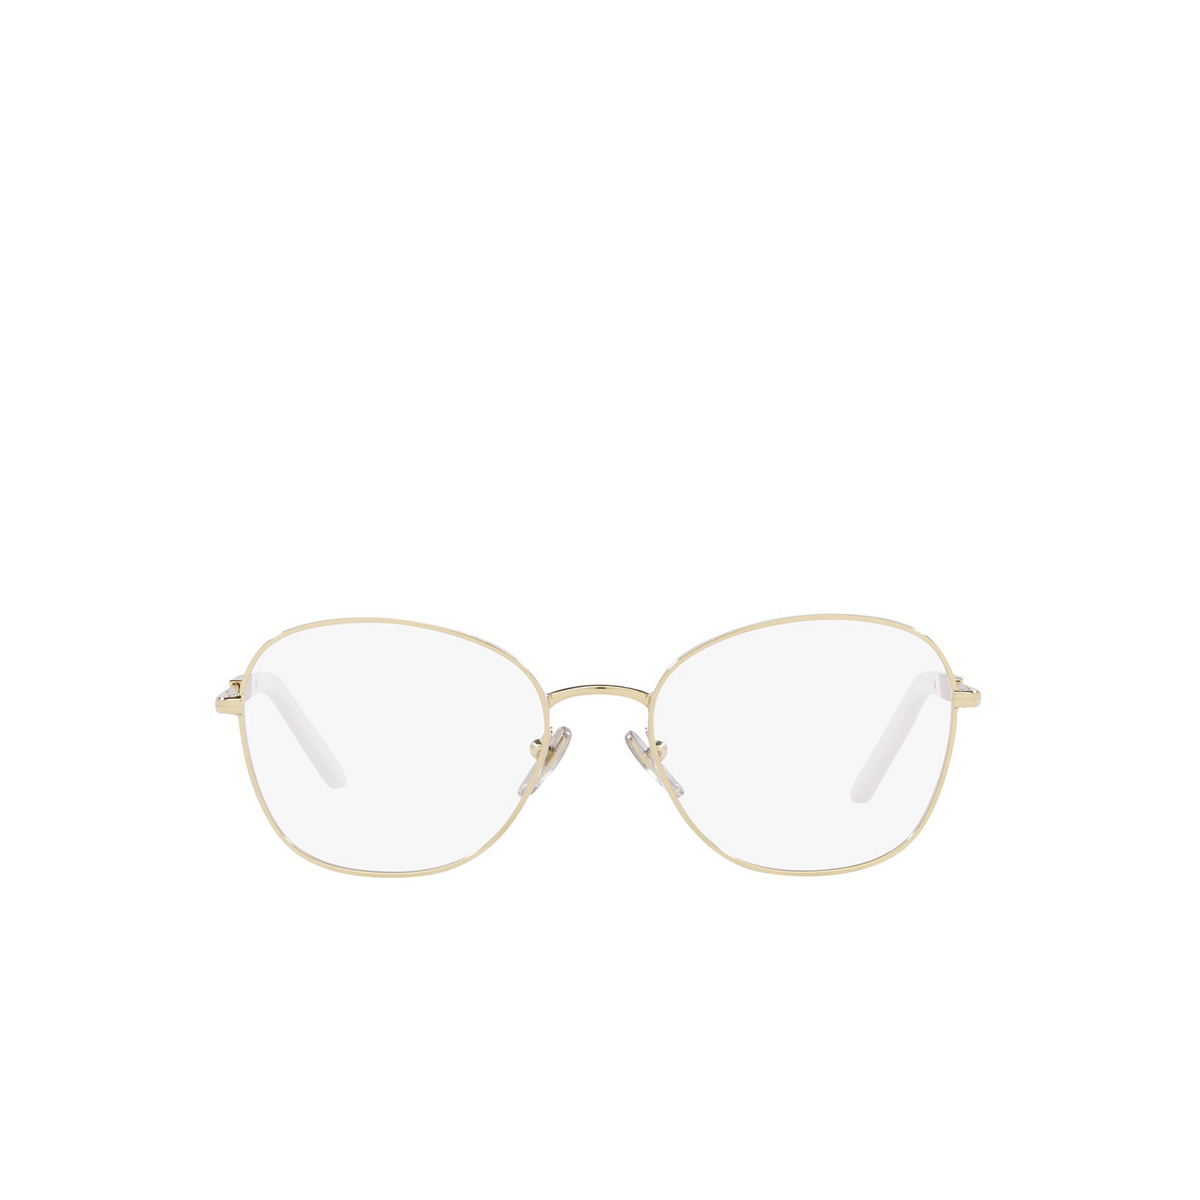 Prada® Round Eyeglasses: PR 64YV color Pale Gold / Talco 09U1O1 - front view.